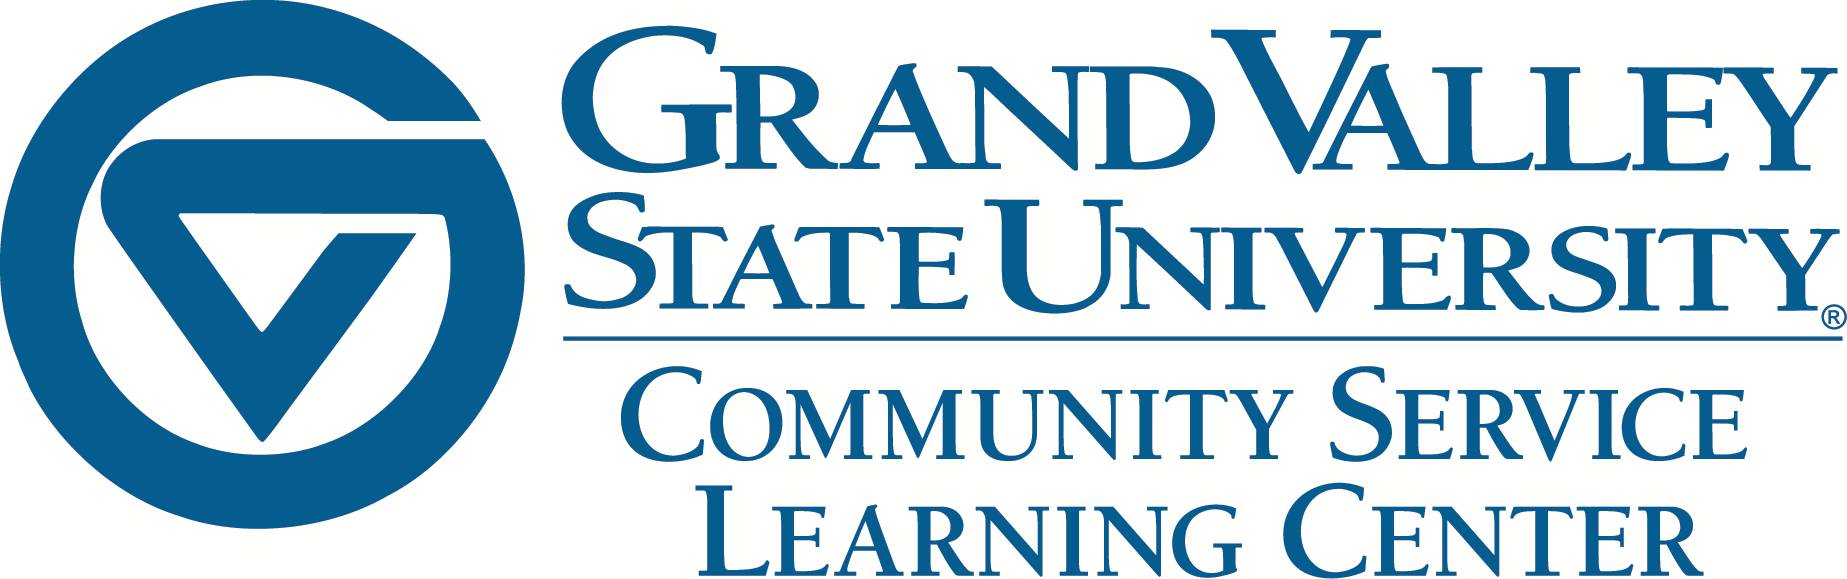 Grand Valley State University Community Service Learning Center Logo